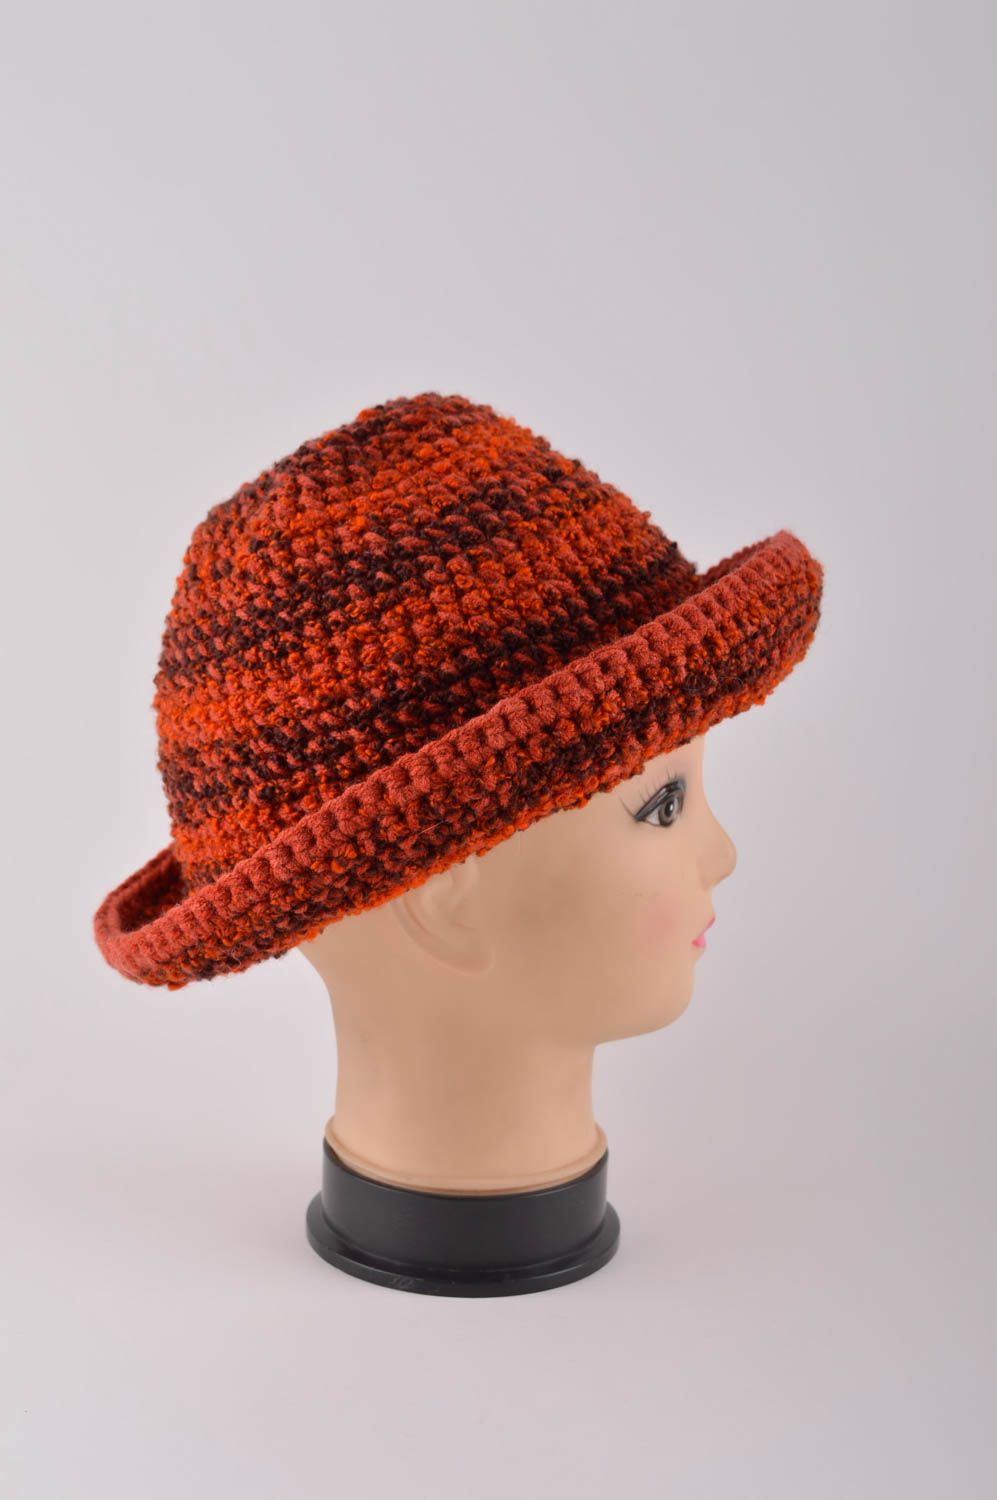 Handmade crochet hat womens hat accessories for women designer hats gift ideas photo 4